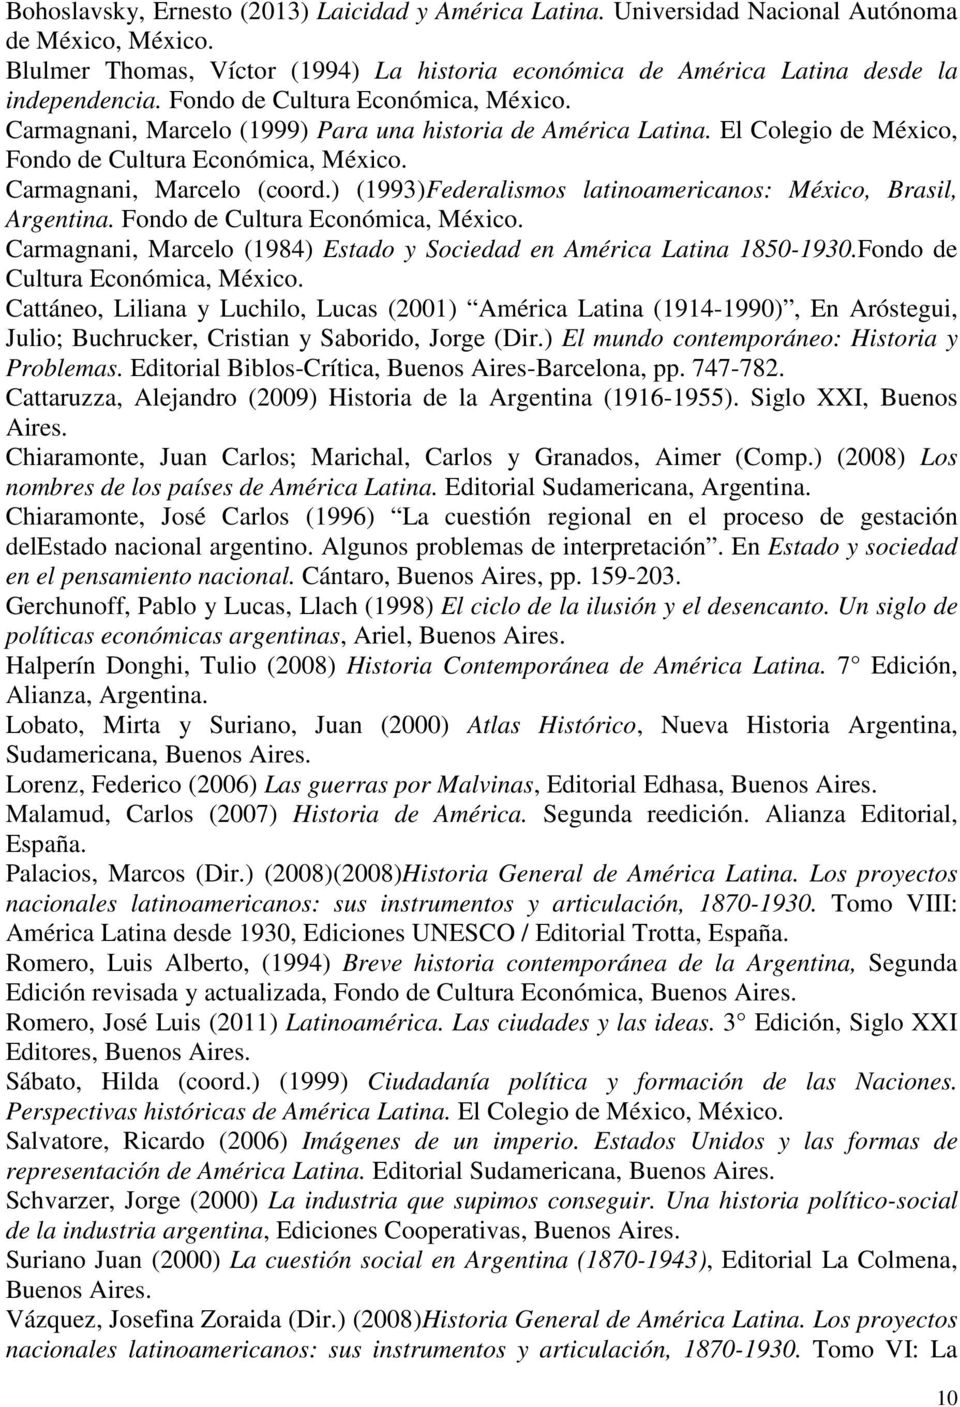 ) (1993)Federalismos latinoamericanos: México, Brasil, Argentina. Fondo de Cultura Económica, México. Carmagnani, Marcelo (1984) Estado y Sociedad en América Latina 1850-1930.